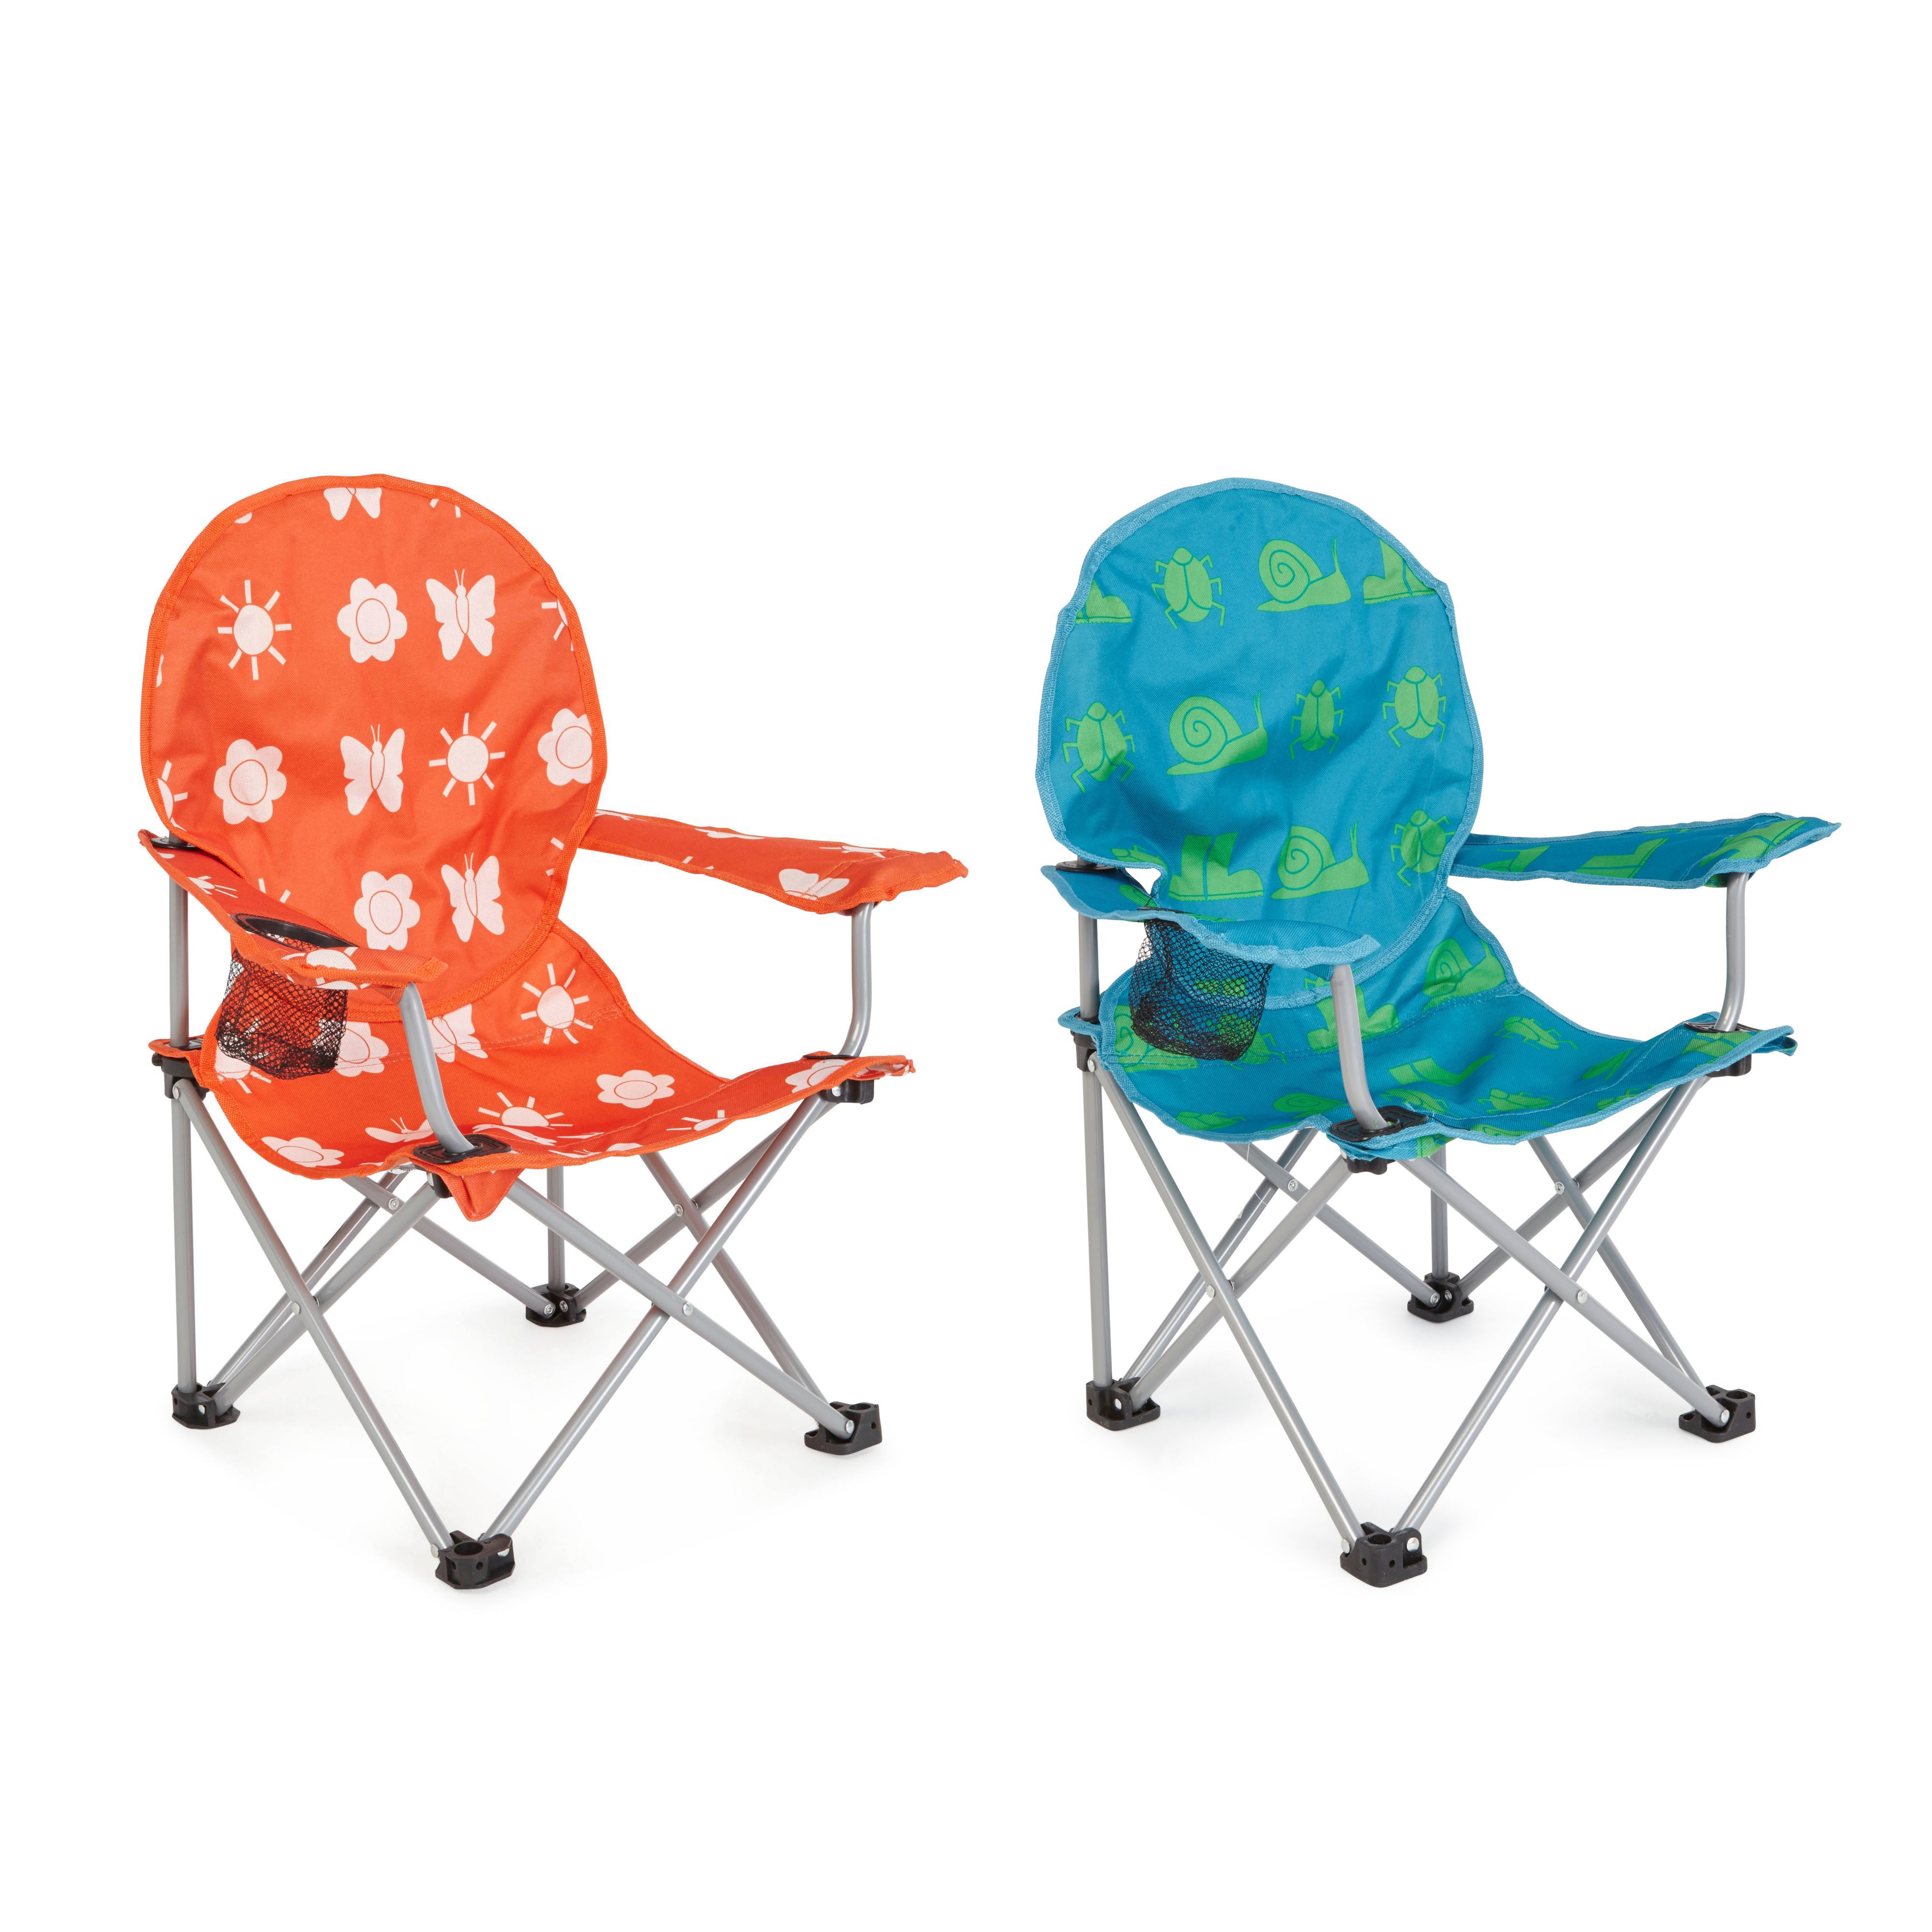 Bq Camping Chairs - camping distractiv